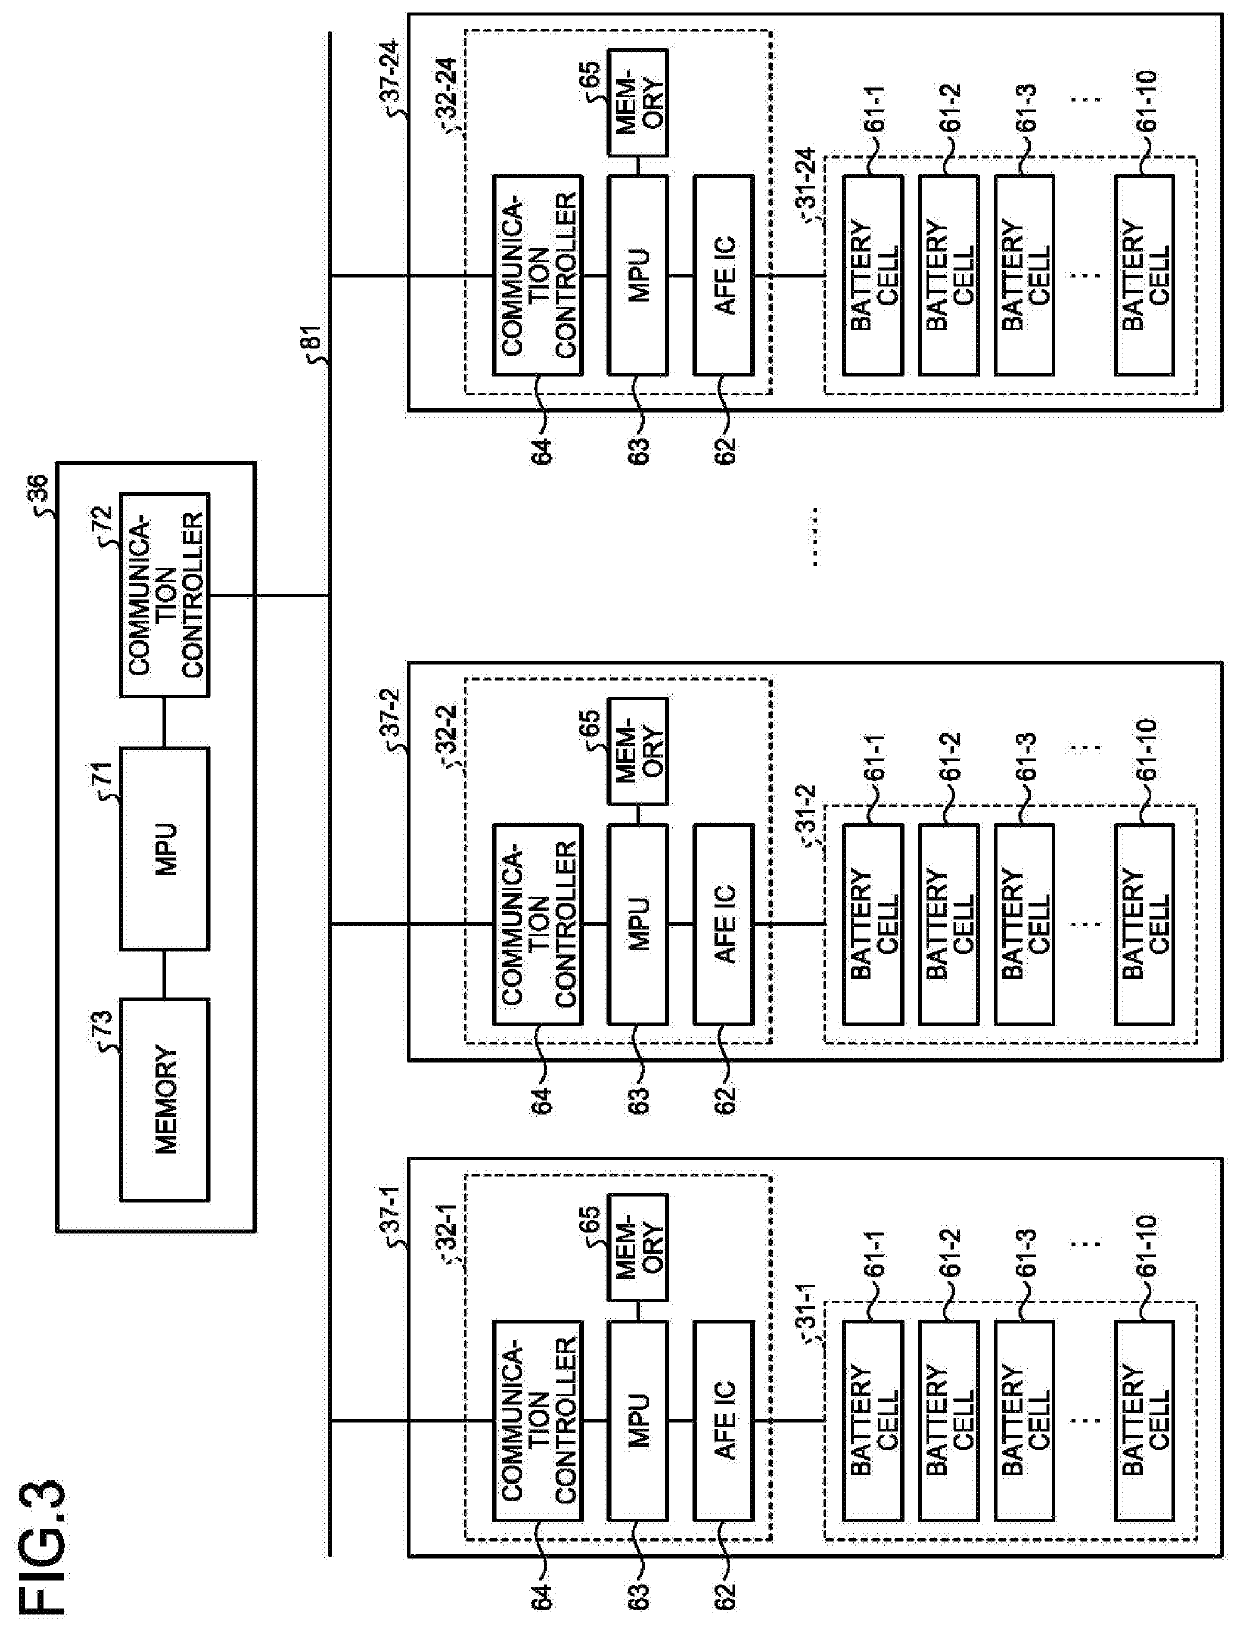 Electric storage capacity estimation apparatus, method and program